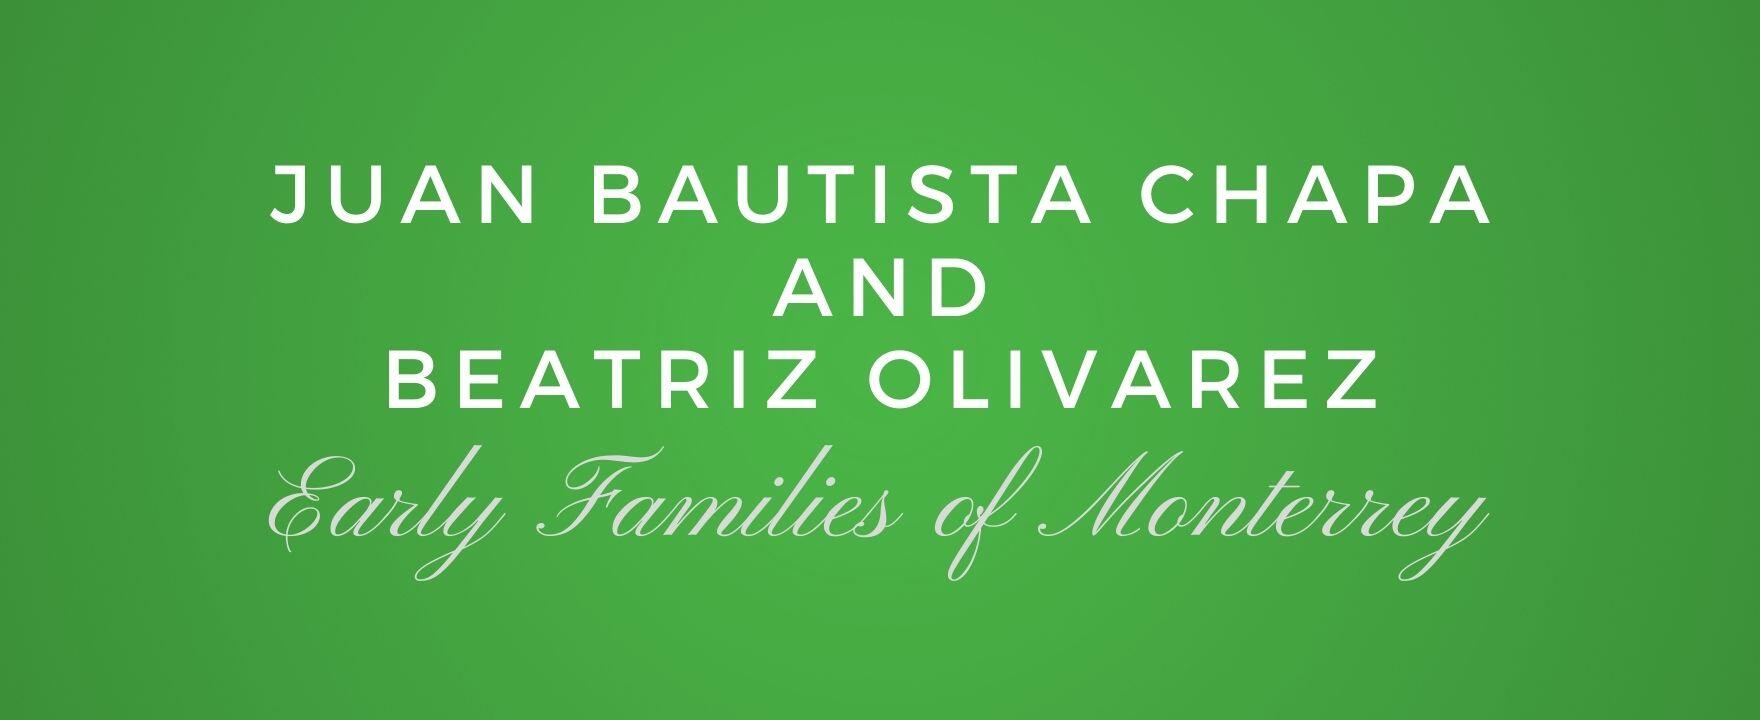 Juan Bautista Chapa and Beatriz Olivarez